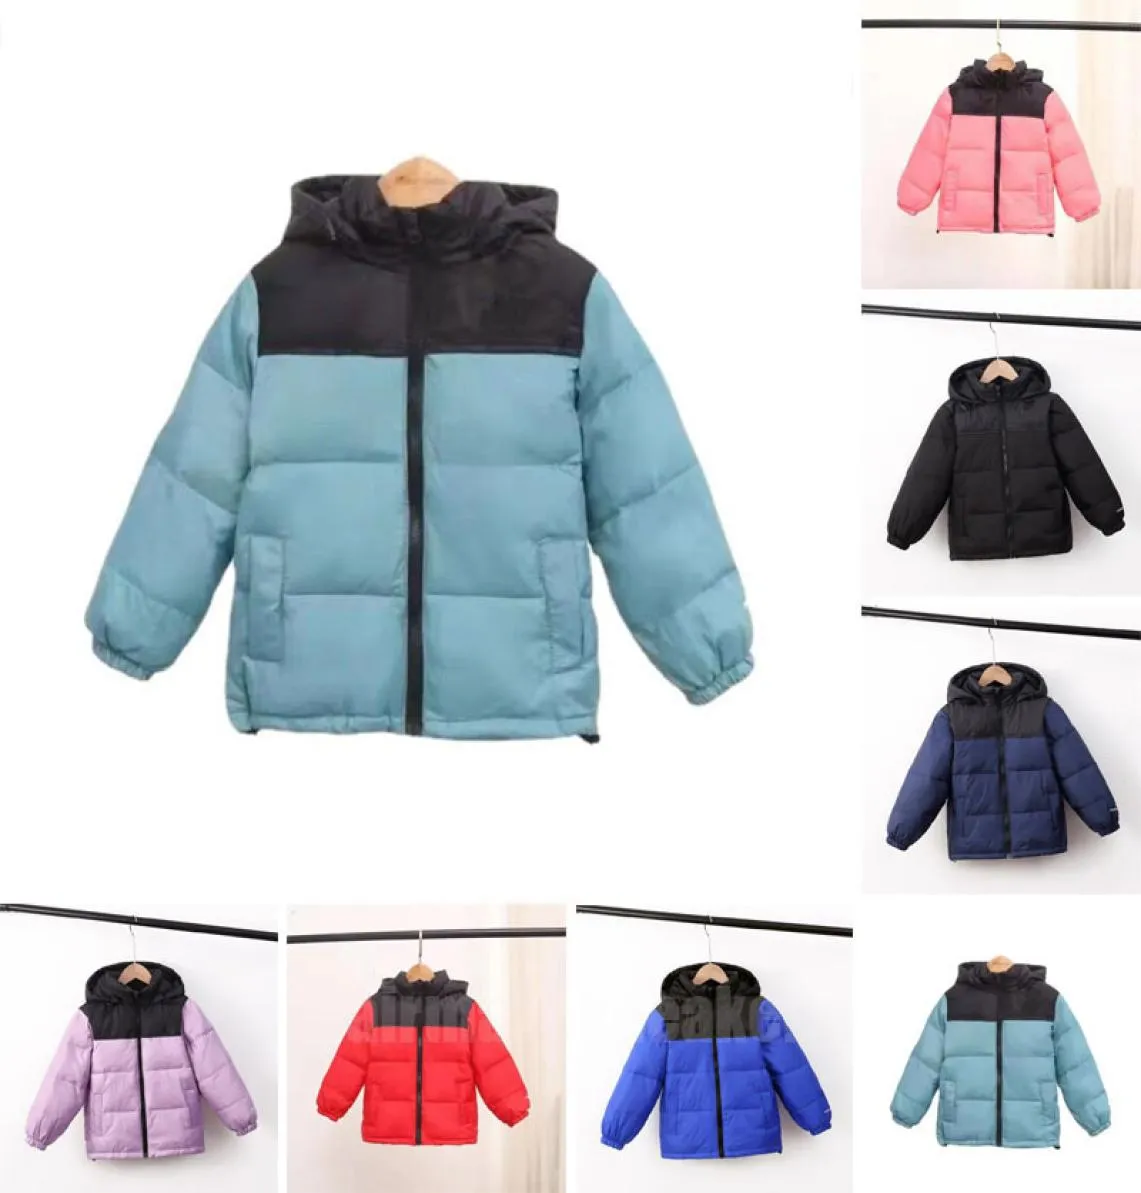 Kids Coat hildren NF Down north designer face winter Jacket boys girls youth outdoor Warm Parka Black Puffer Jackets Letter Print 5604934